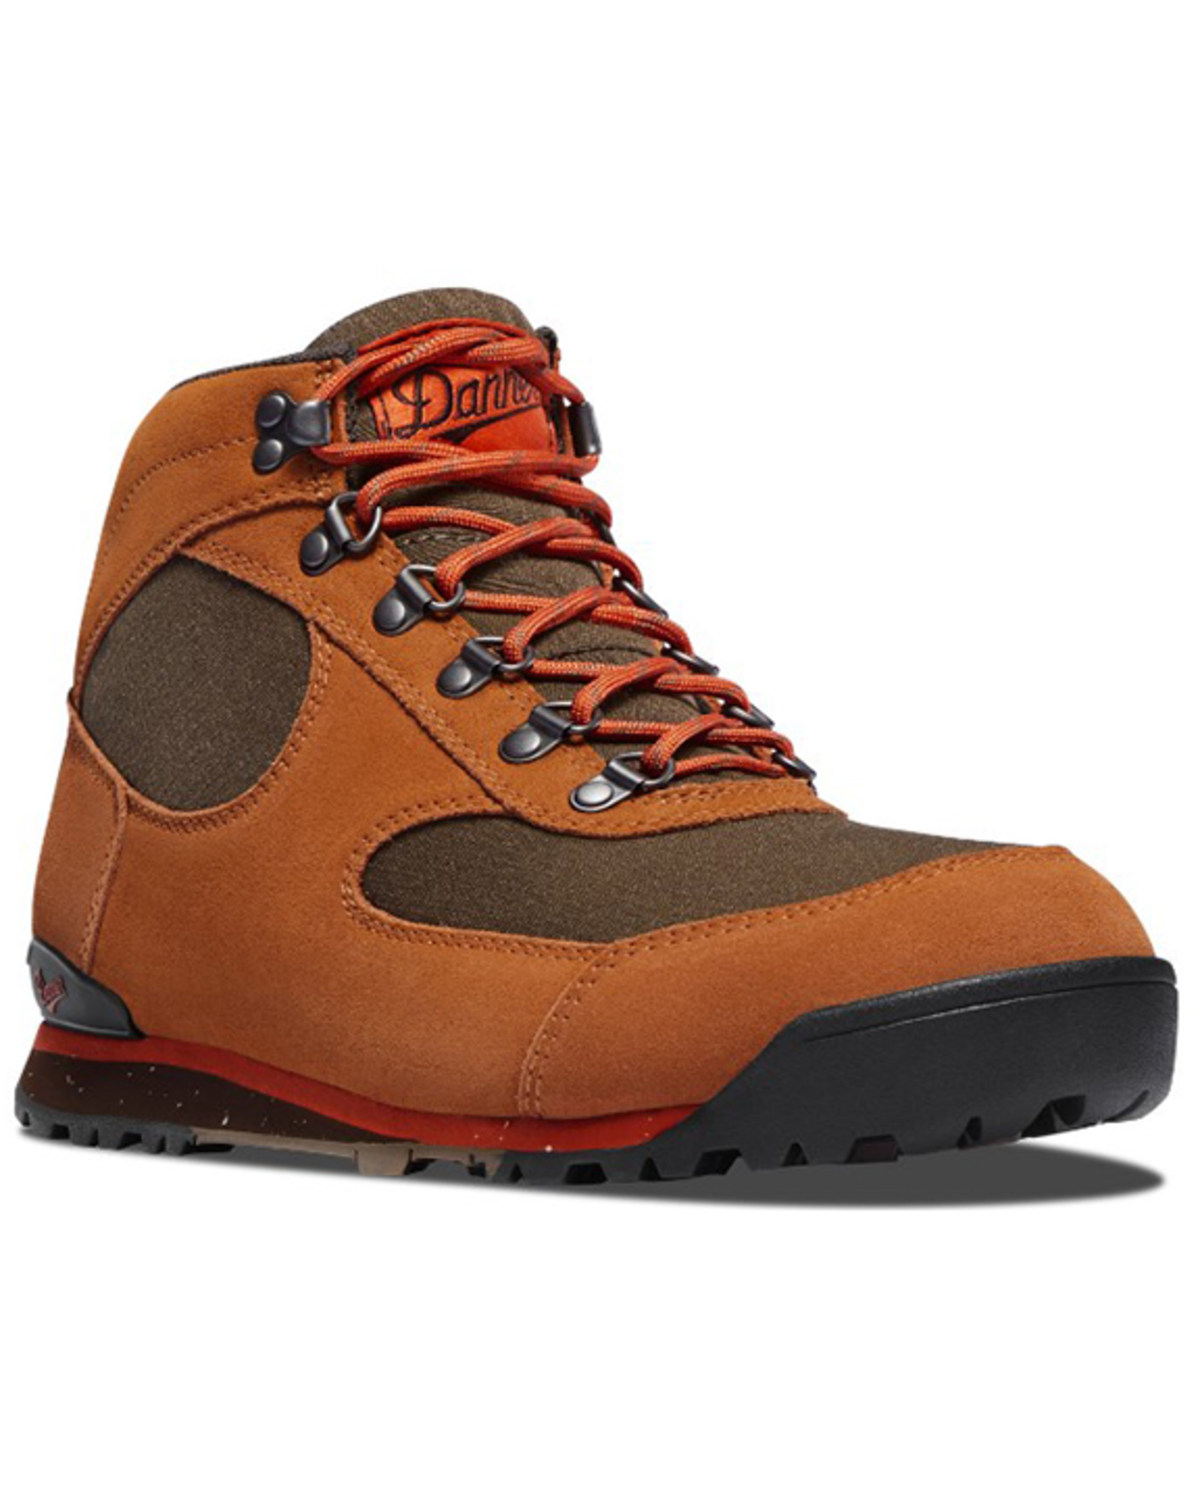 Danner Men's Jag Sierra Hiker Work Boots - Round Toe